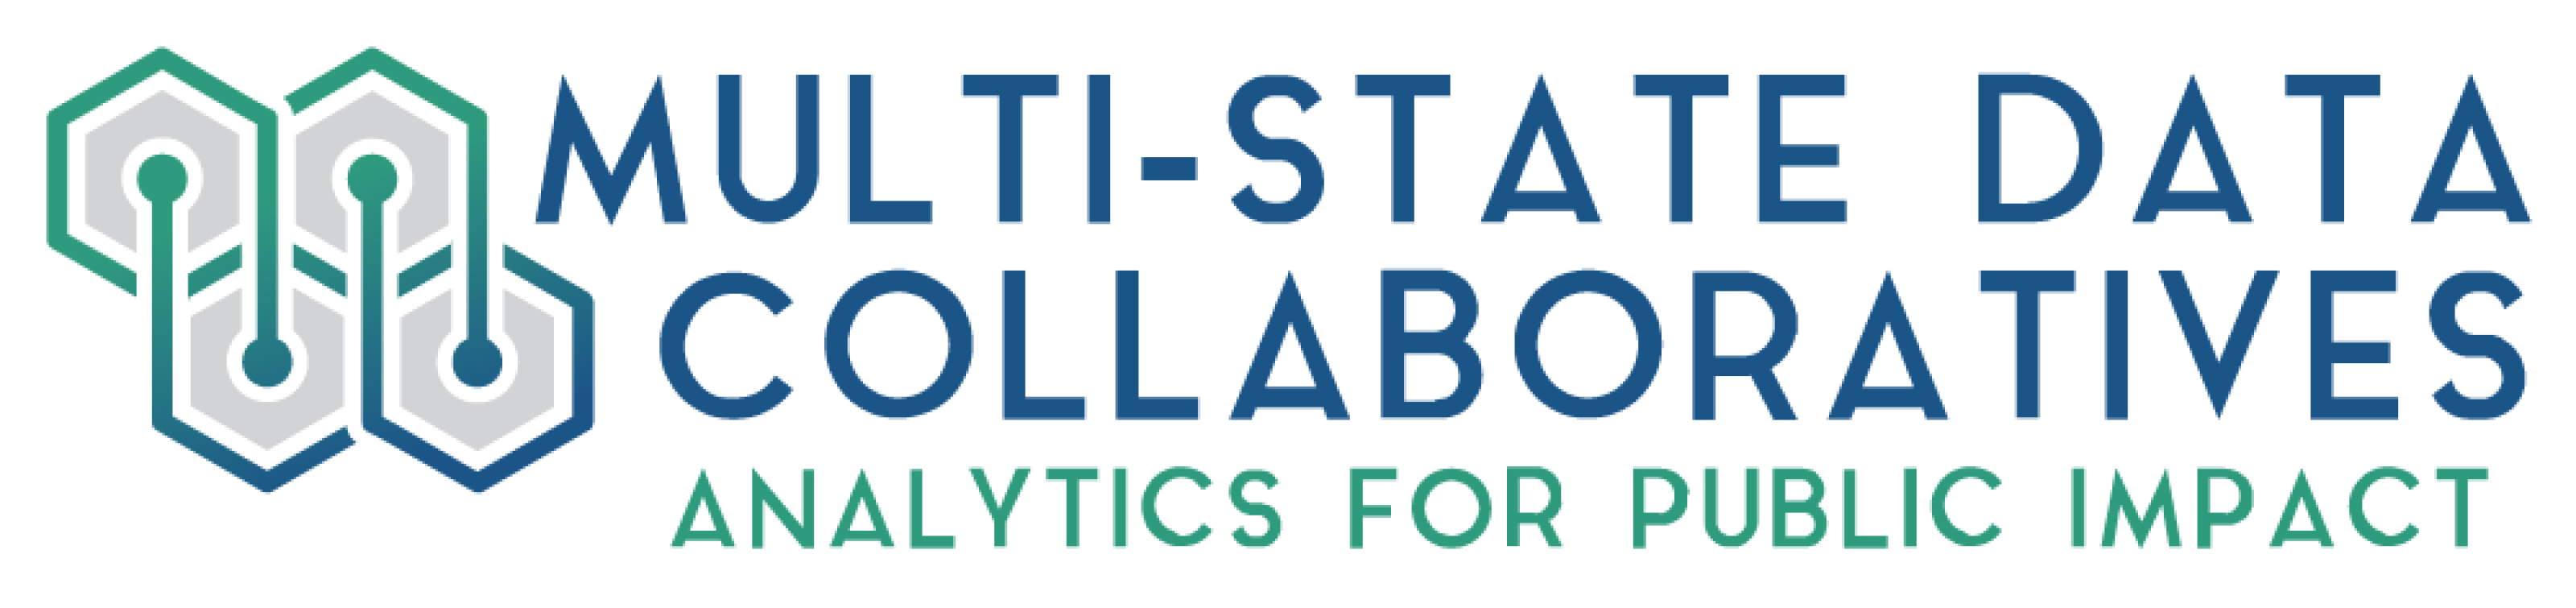 multistate data collaboratives logo